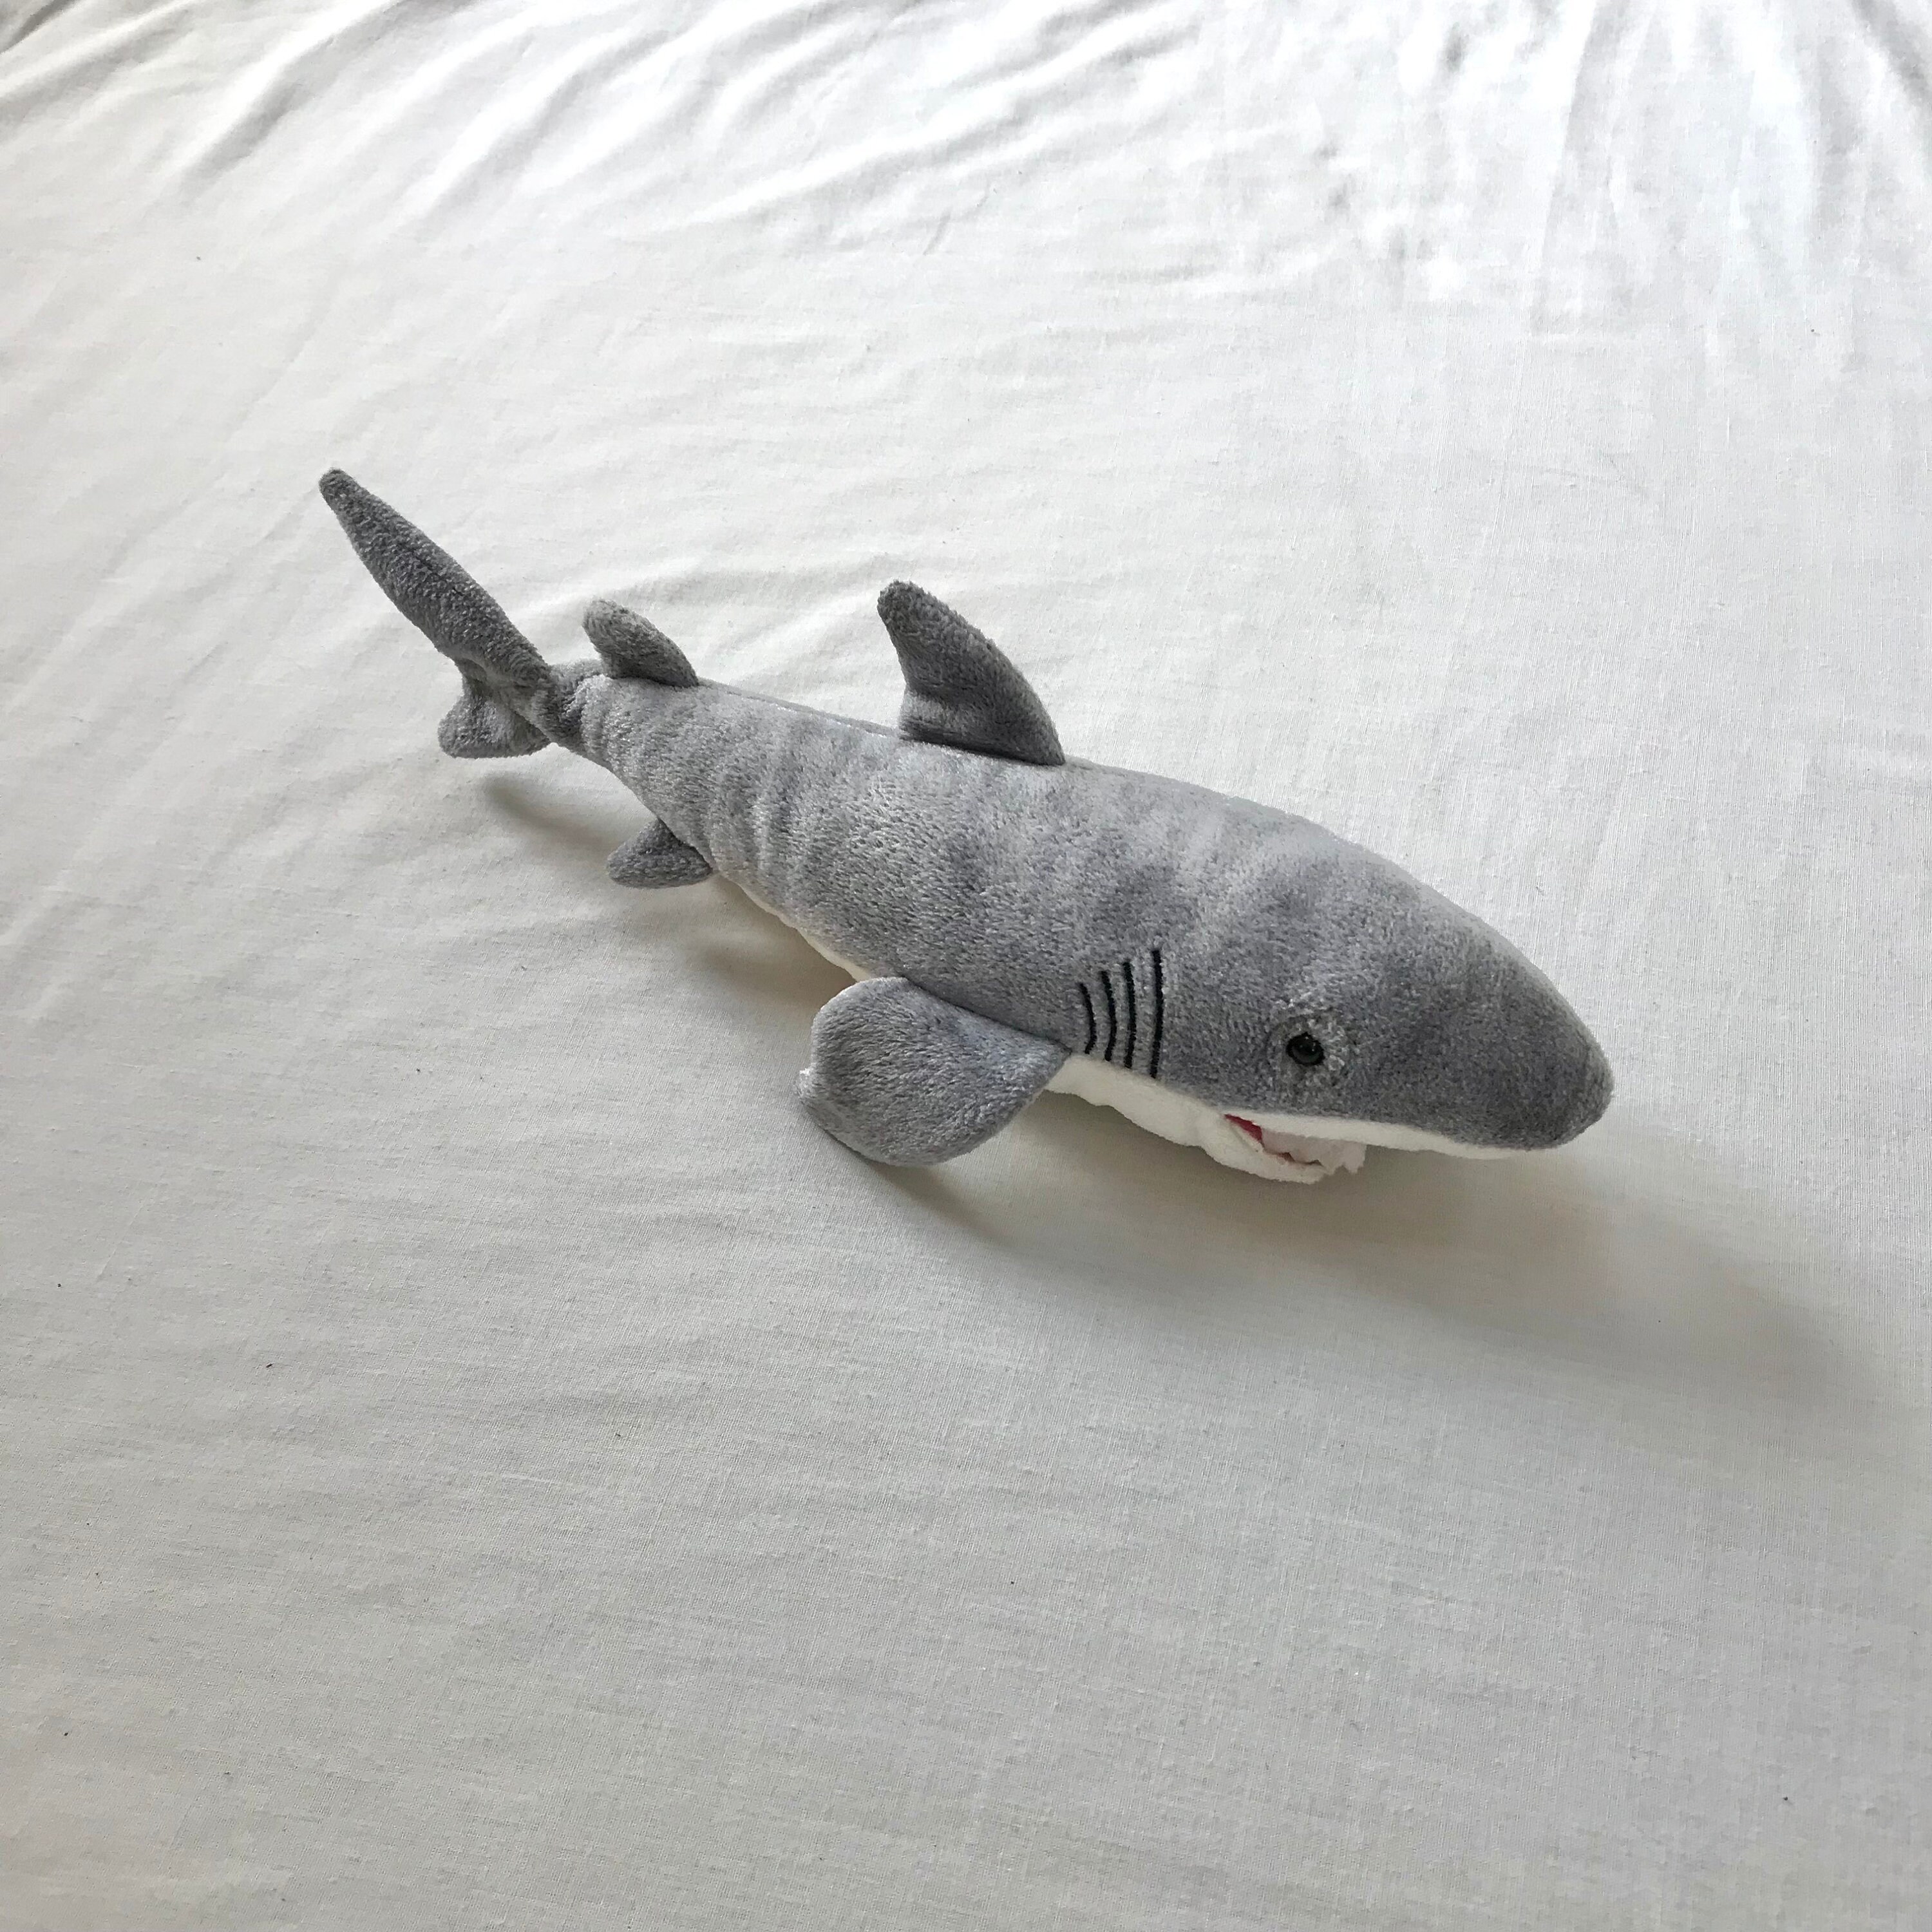 Original Stuffed Chumbuddy Super Size Shark Sleeping Bag Over 6.5 Feet Long  Perfect Gift 